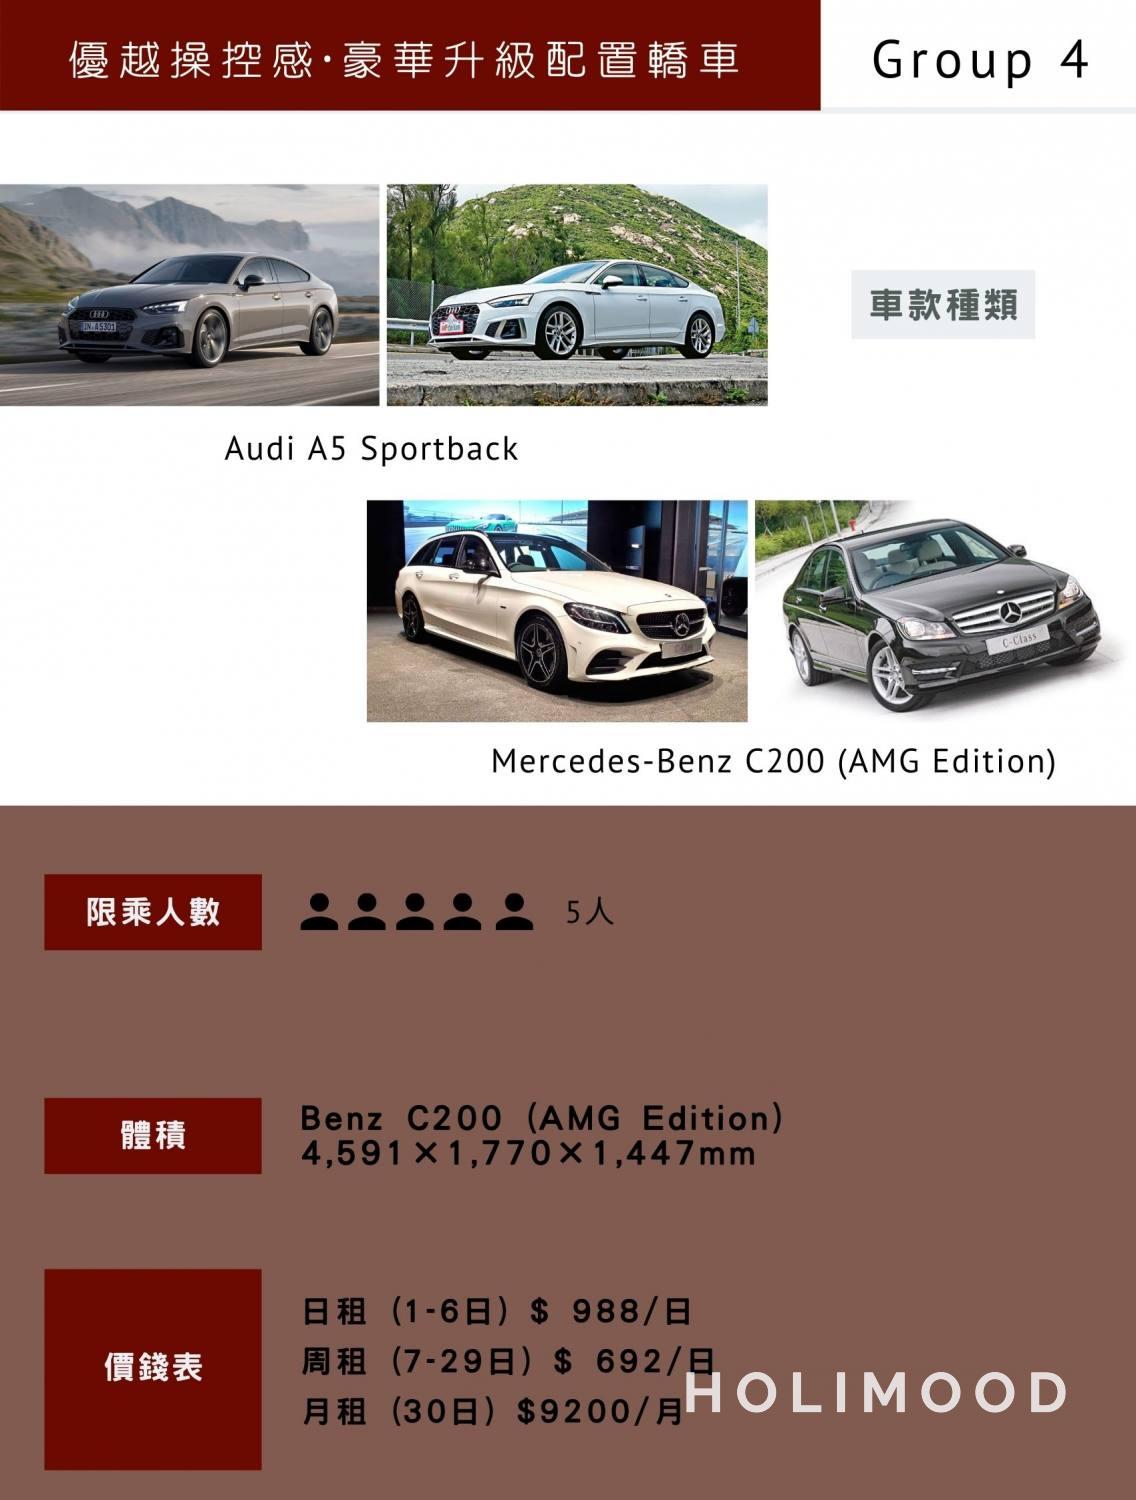 Audi A5/Benz C200 (AMG Edition) - Group 4  豪華優越歐洲名貴轎車 (日租）